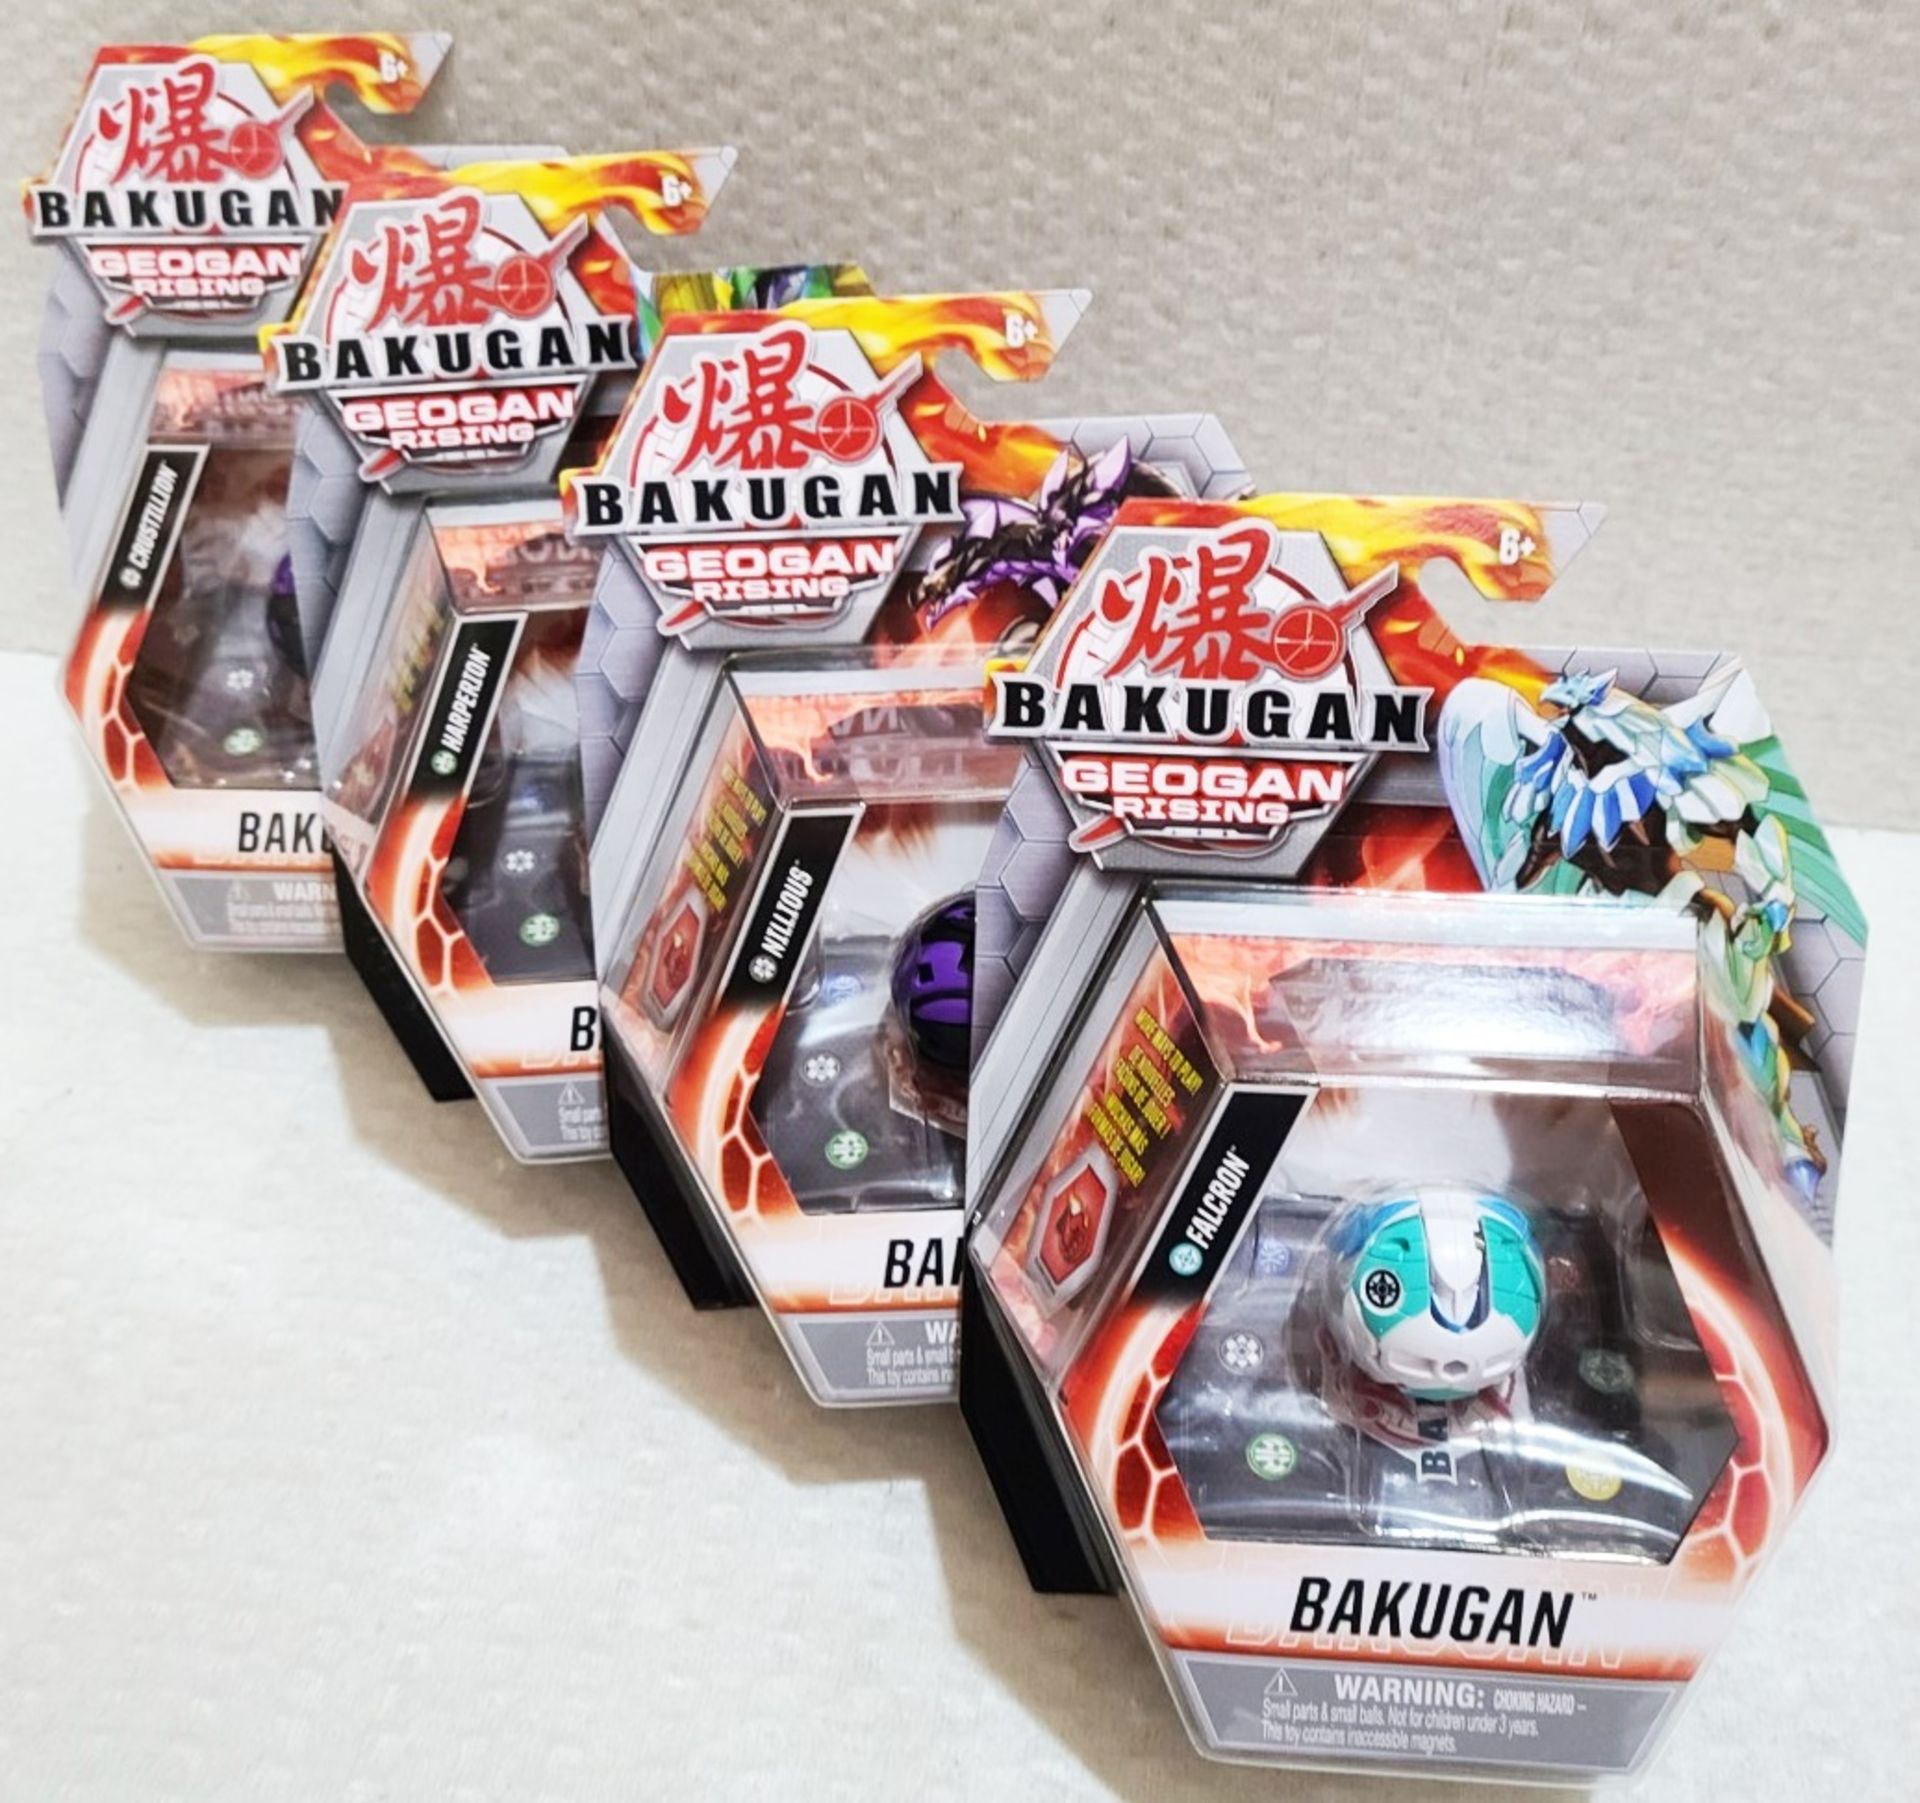 4 x BAKUGAN Bakugan Geogan Rising - Core Collectible Action Figures - Image 7 of 8